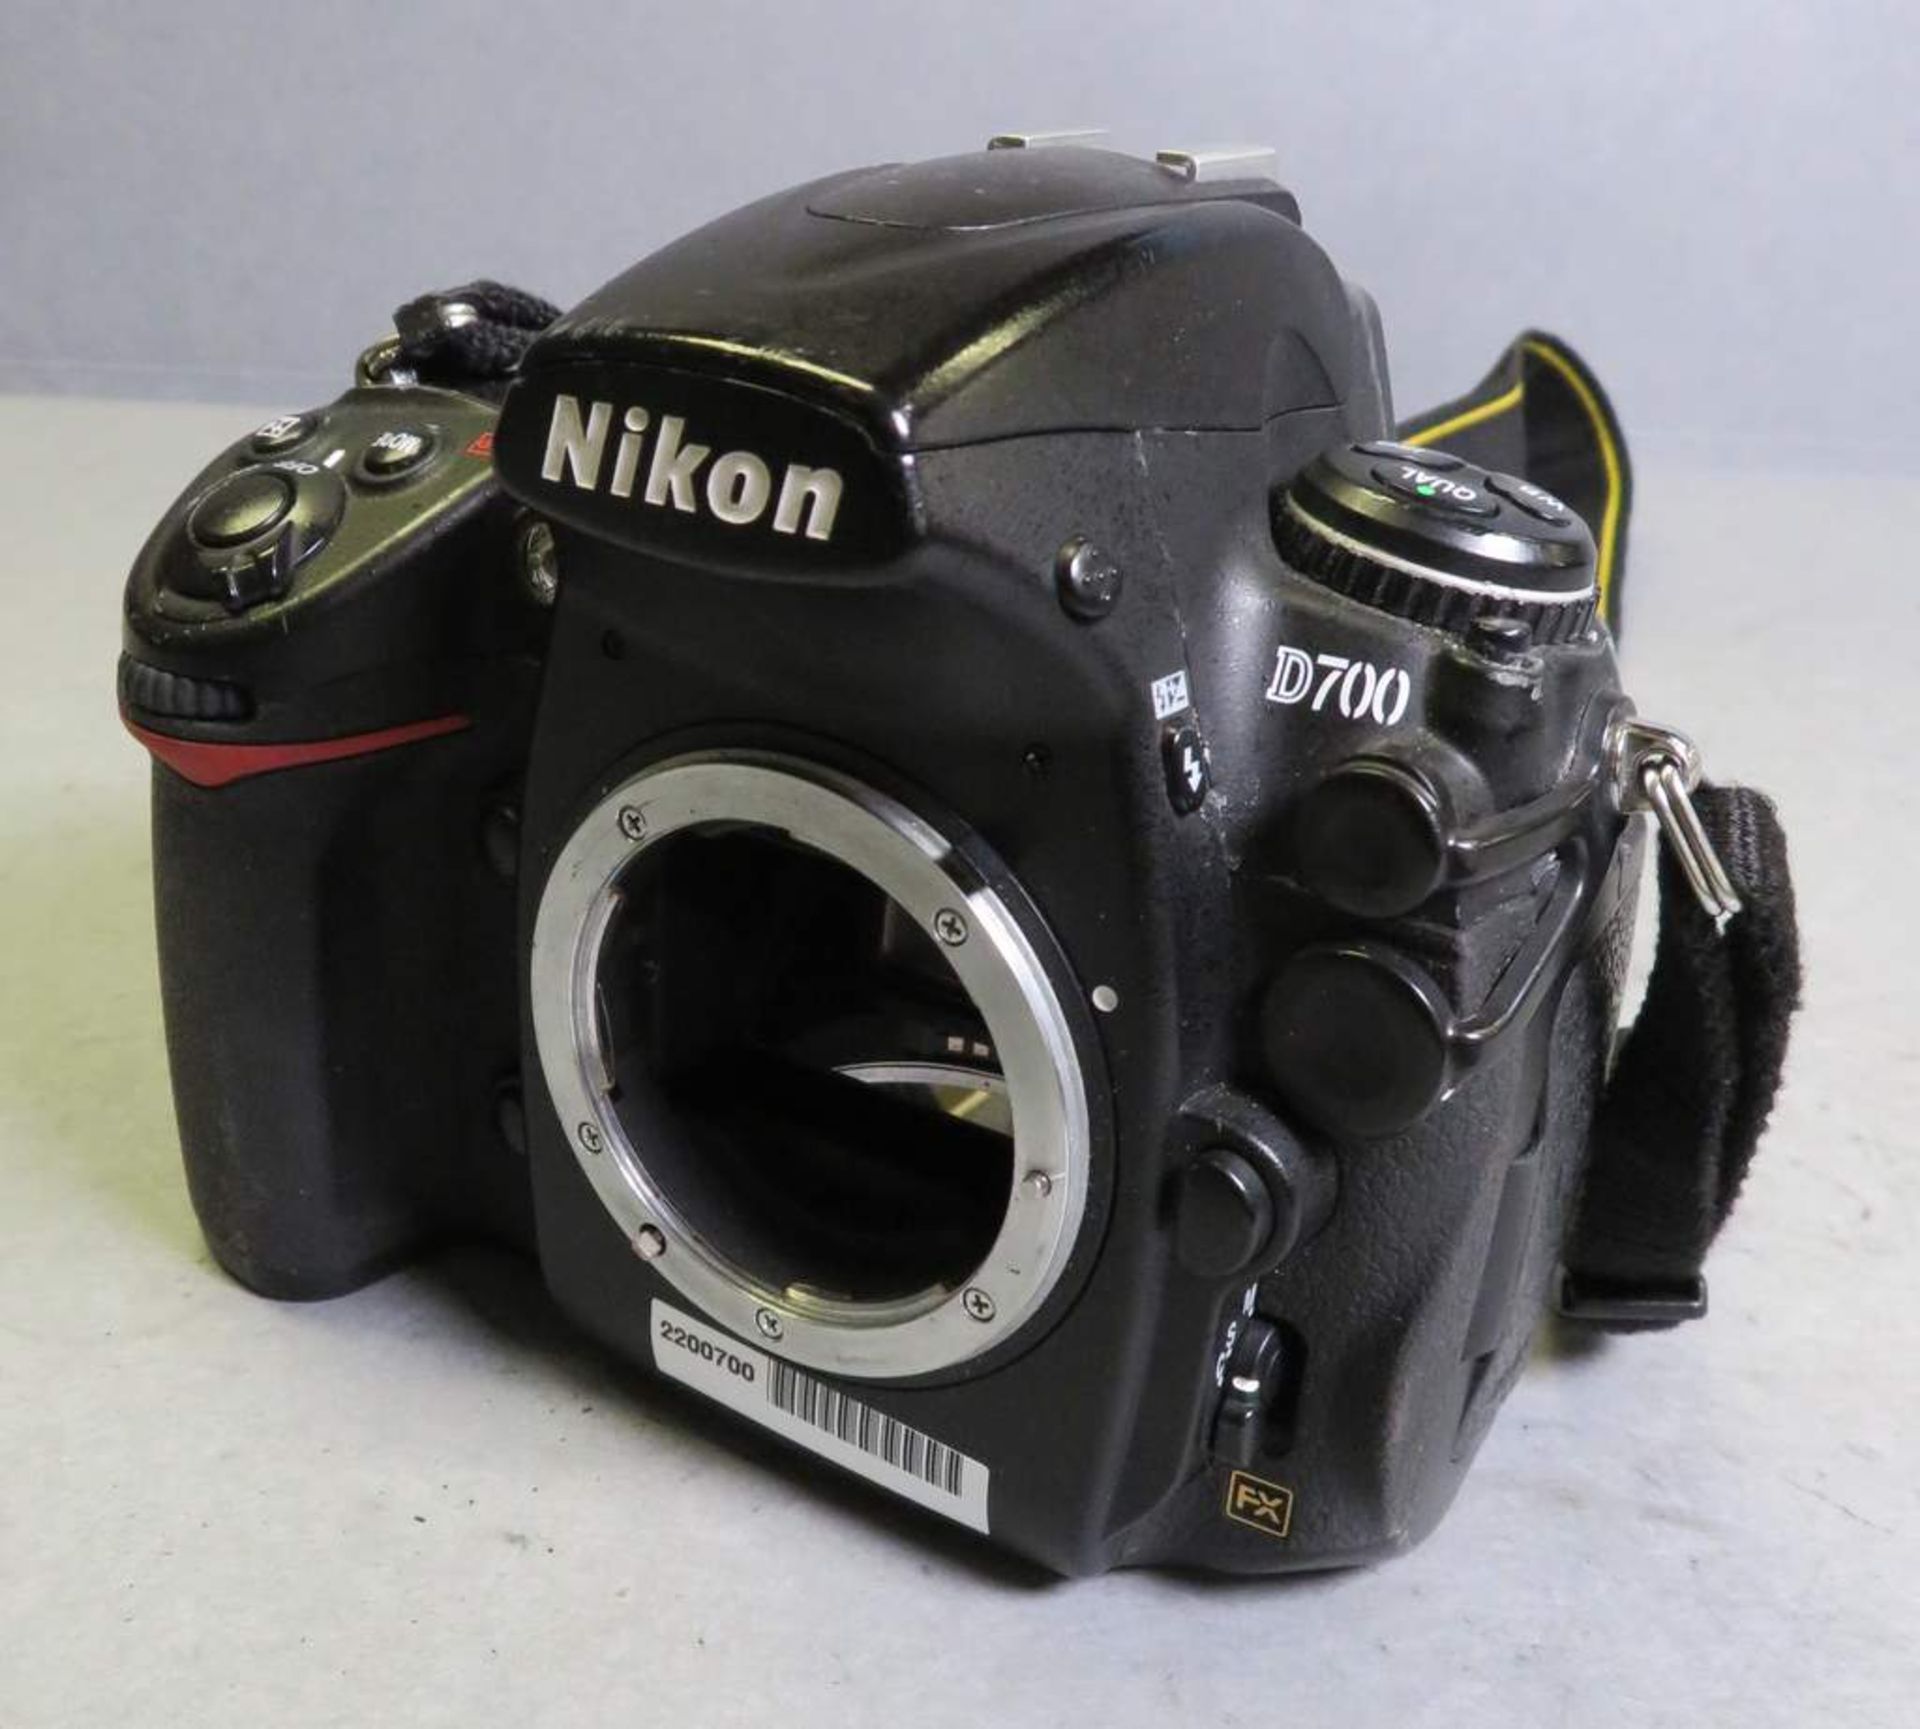 Nikon D700 Camera body - no battery or accessories